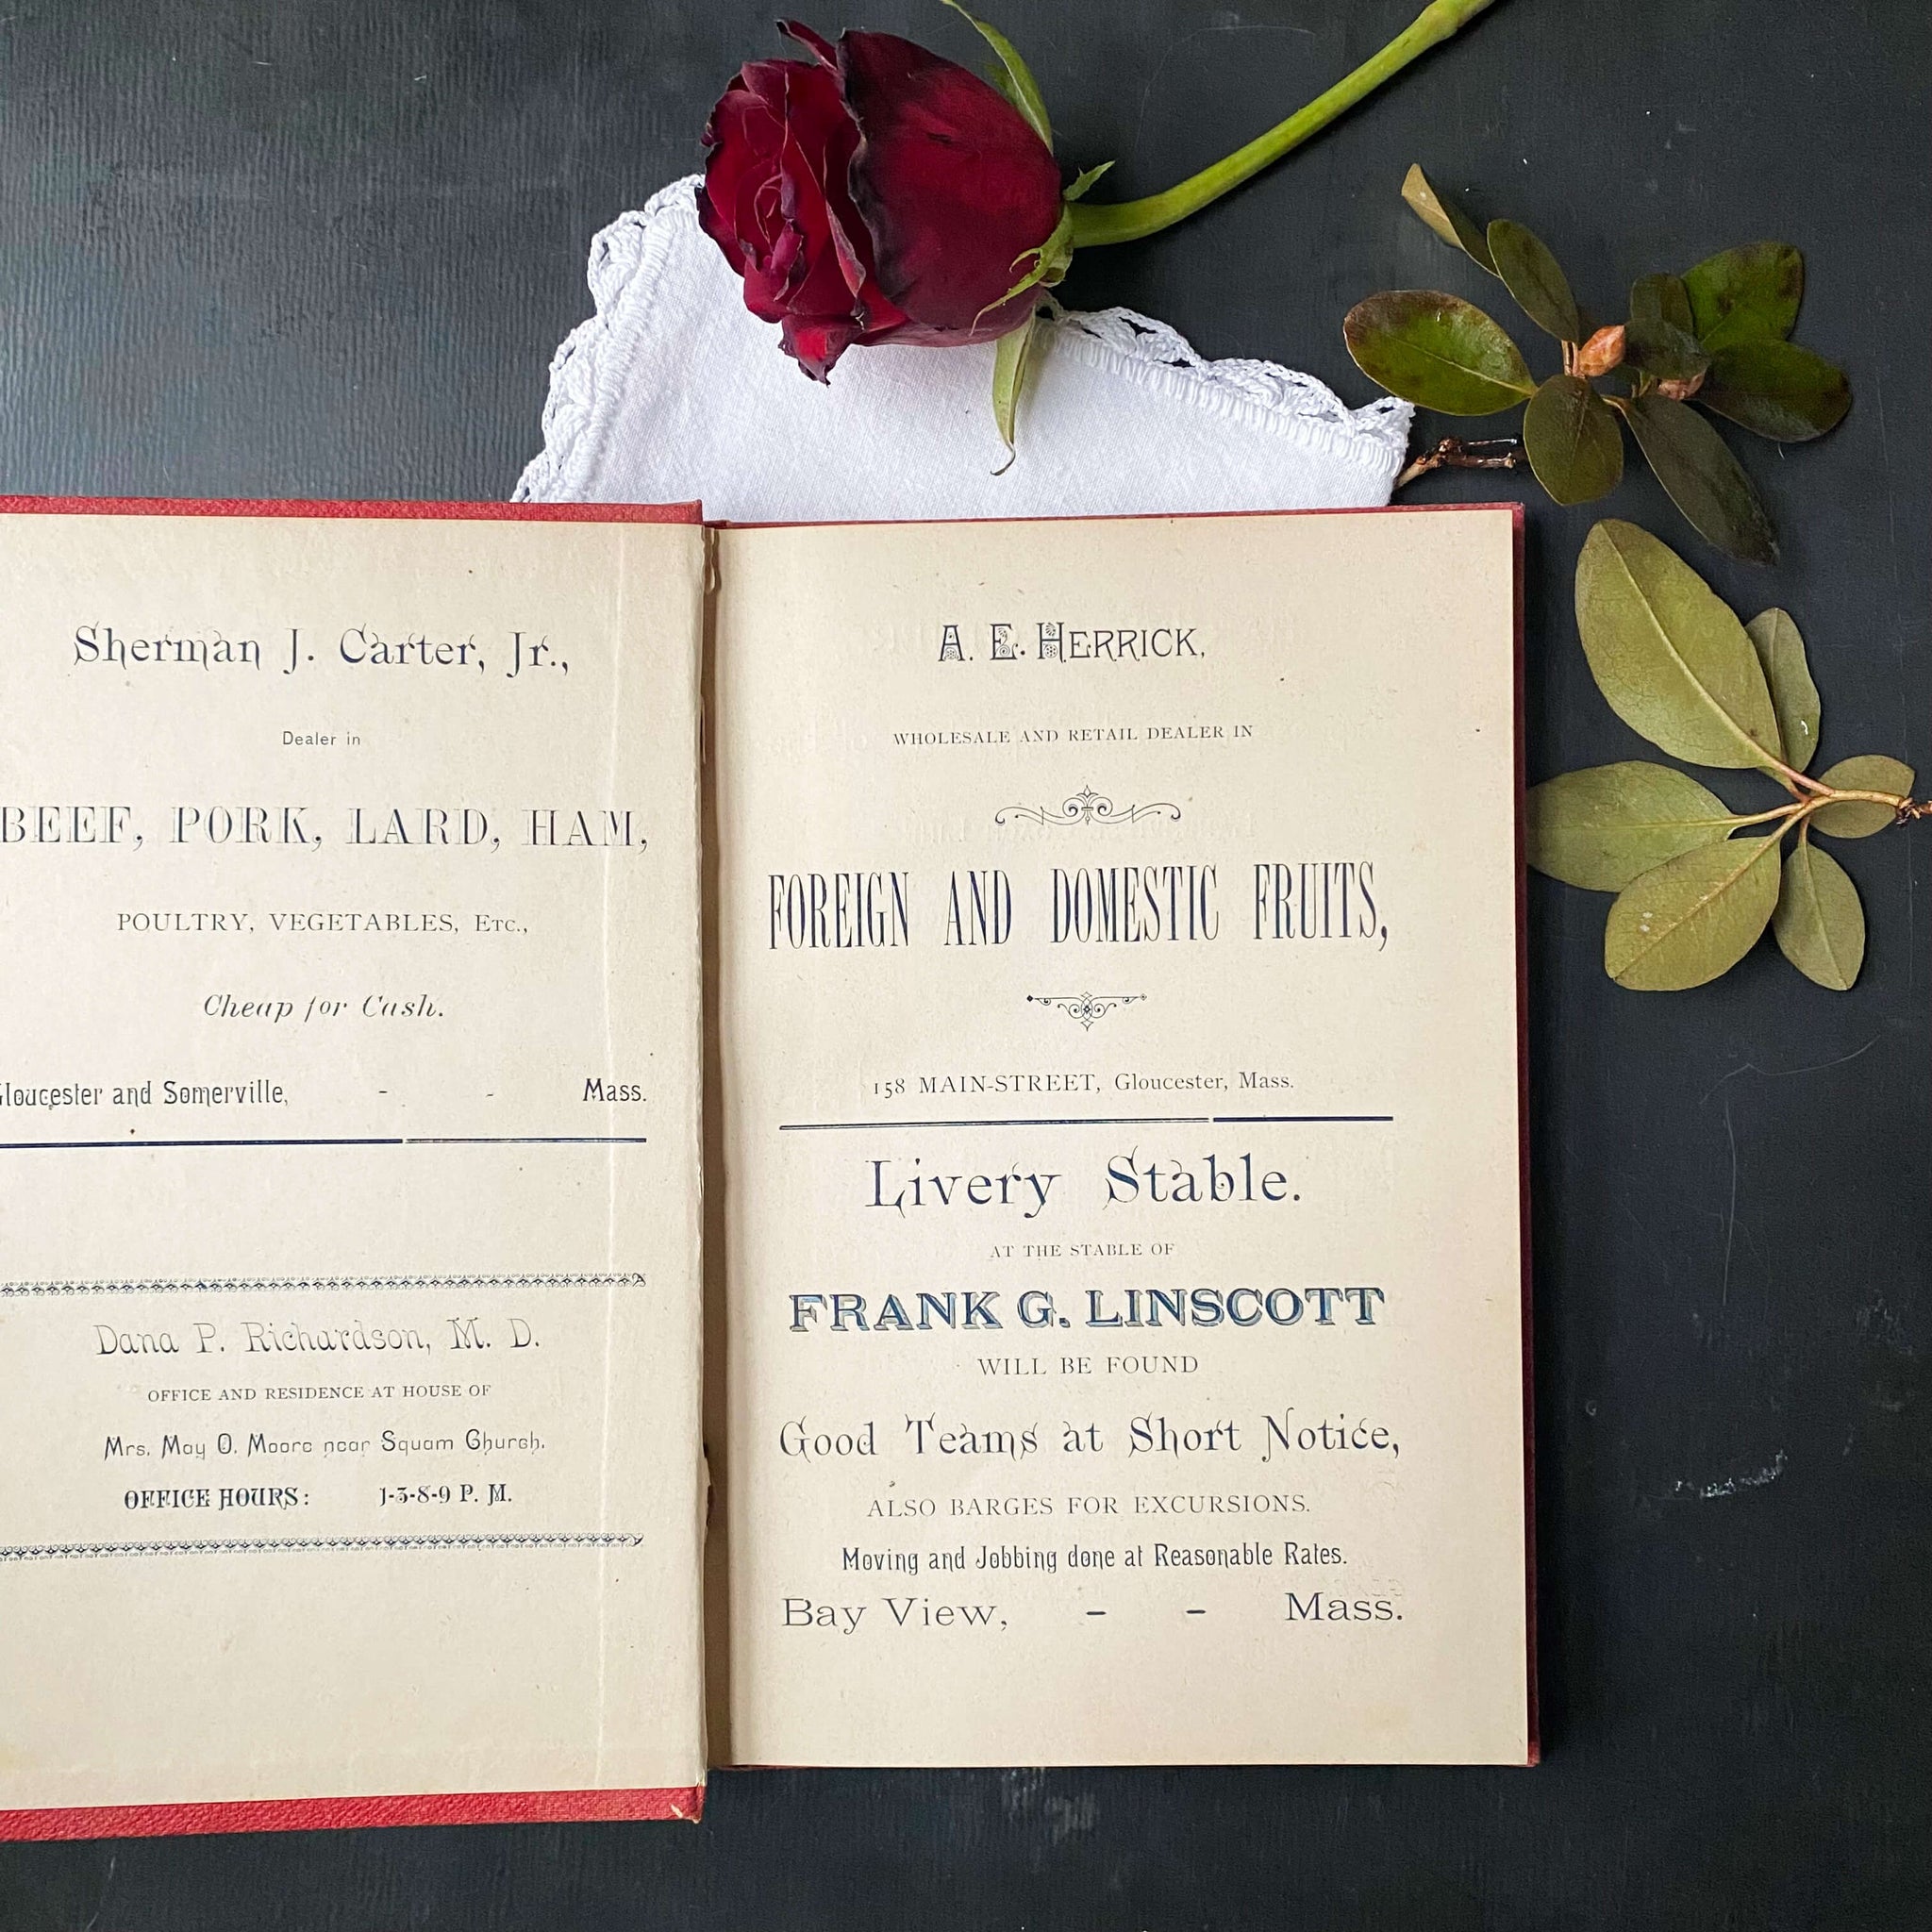 Rare Victorian Etiquette and Recipe Book- Ladies' Handbook and Household Assistant circa 1888